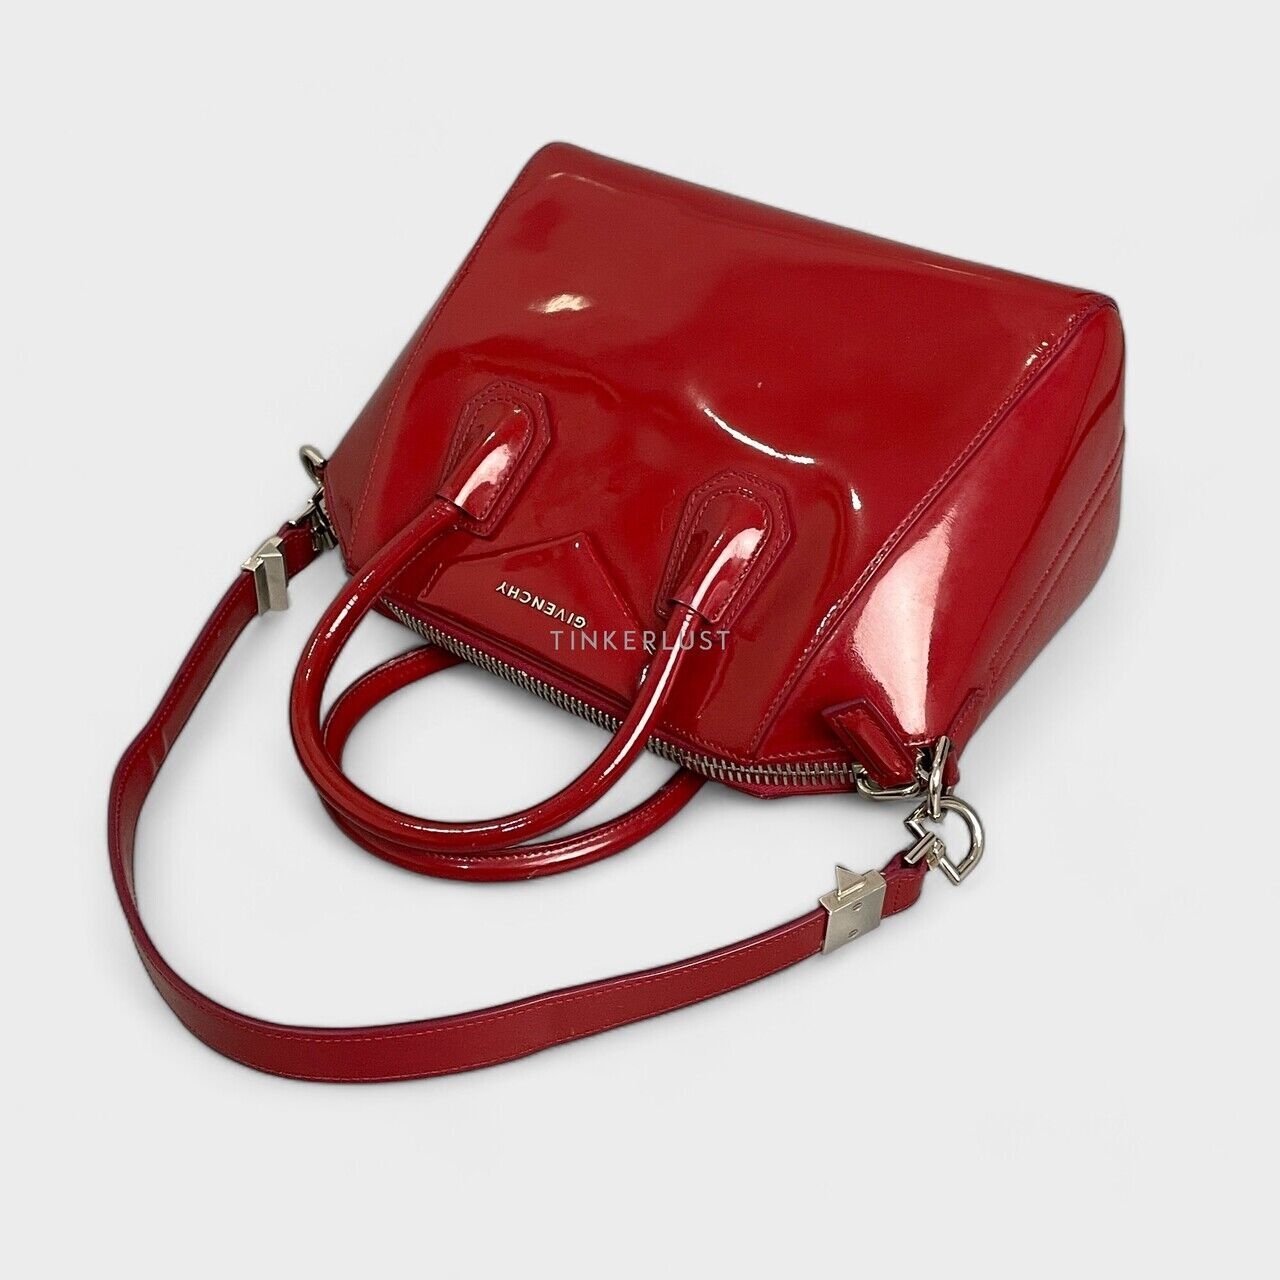 Givenchy Antigona Red Patent Leather SHW Satchel